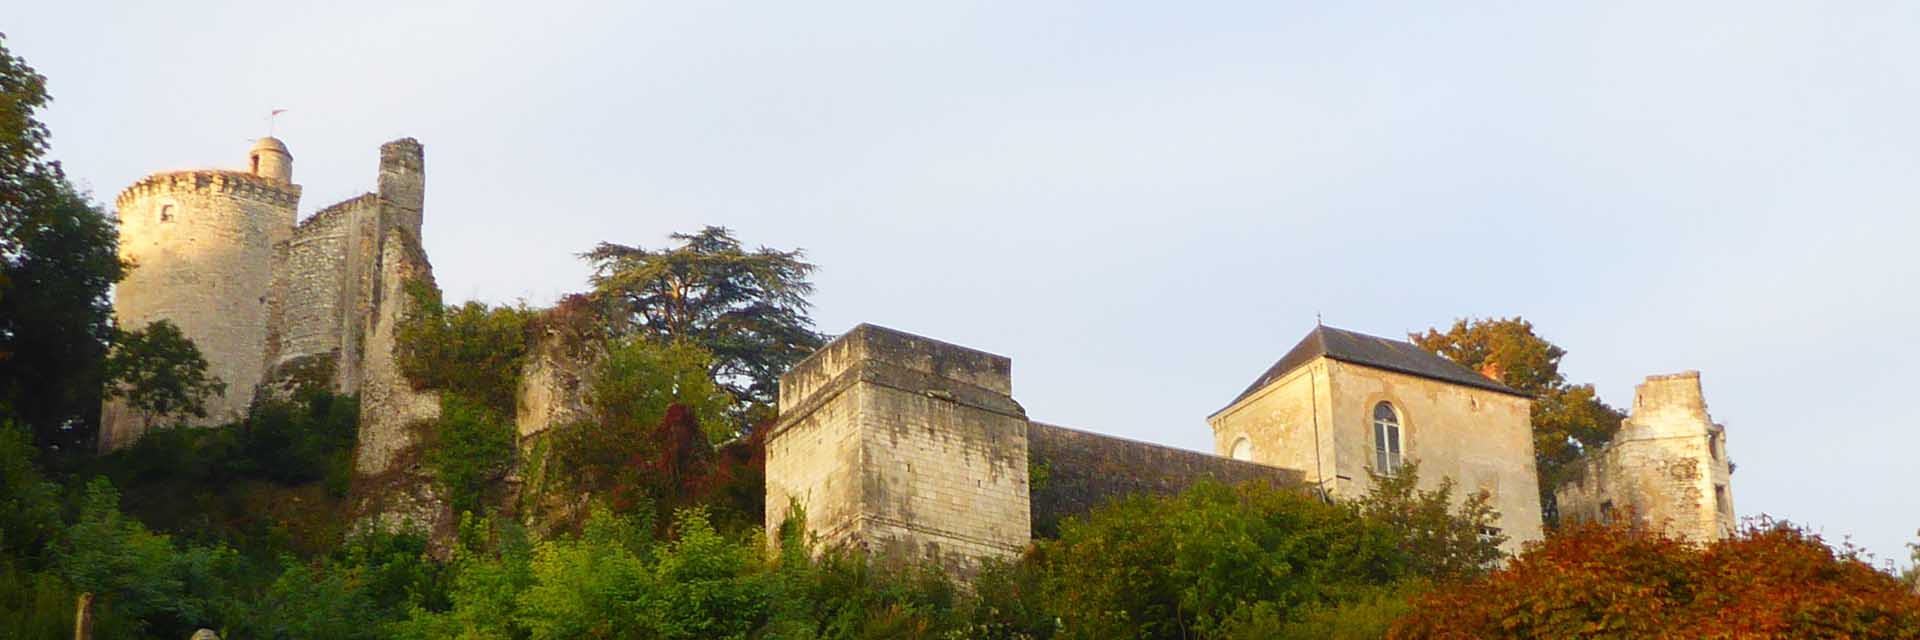 Chateau rec